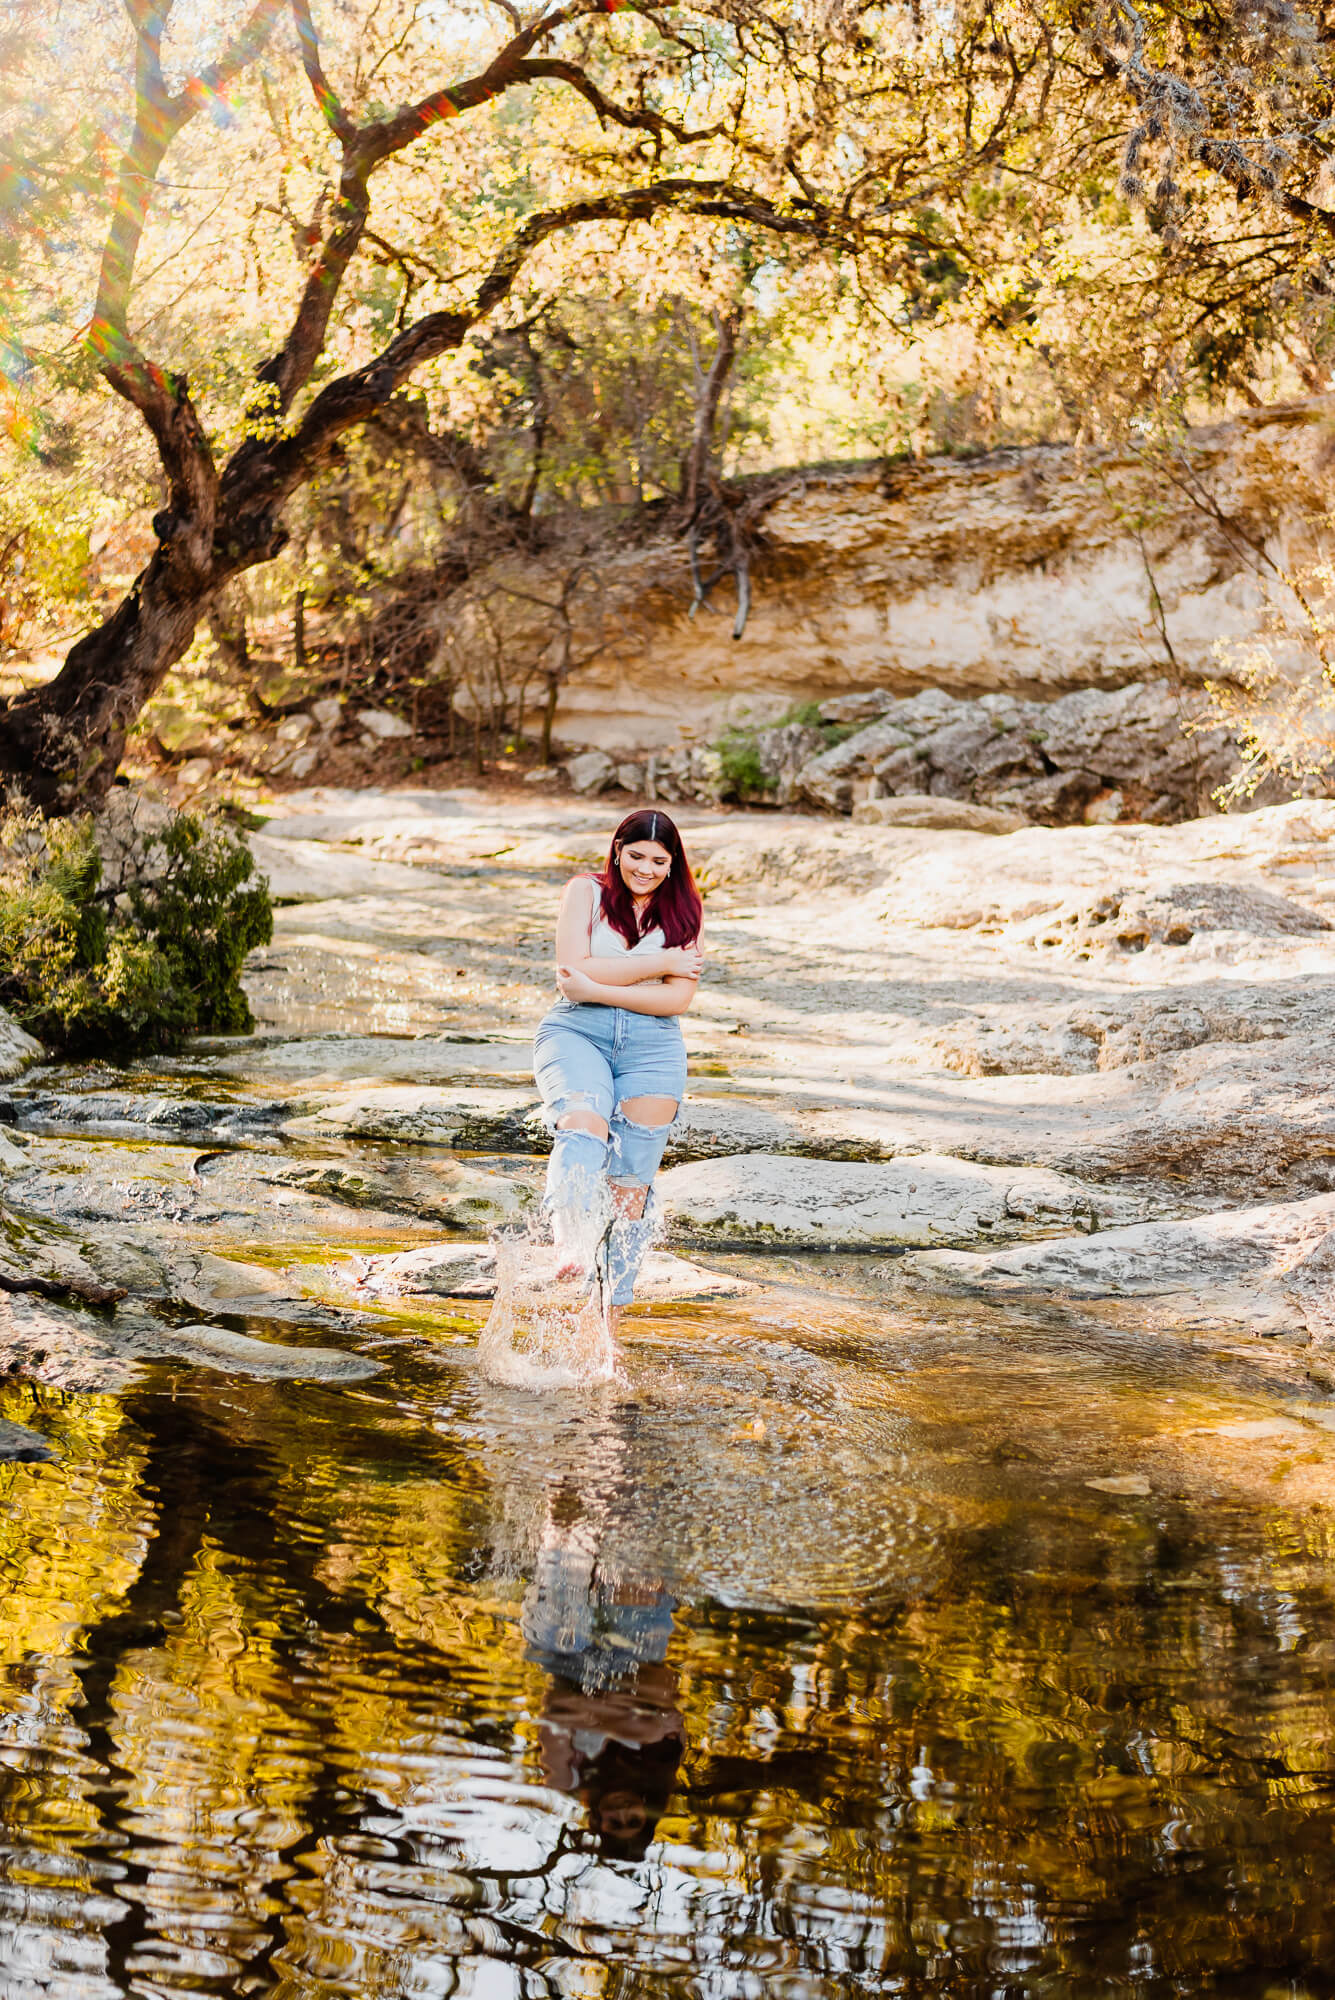 girl kicking water at blunn creek greenbelt in austin texas